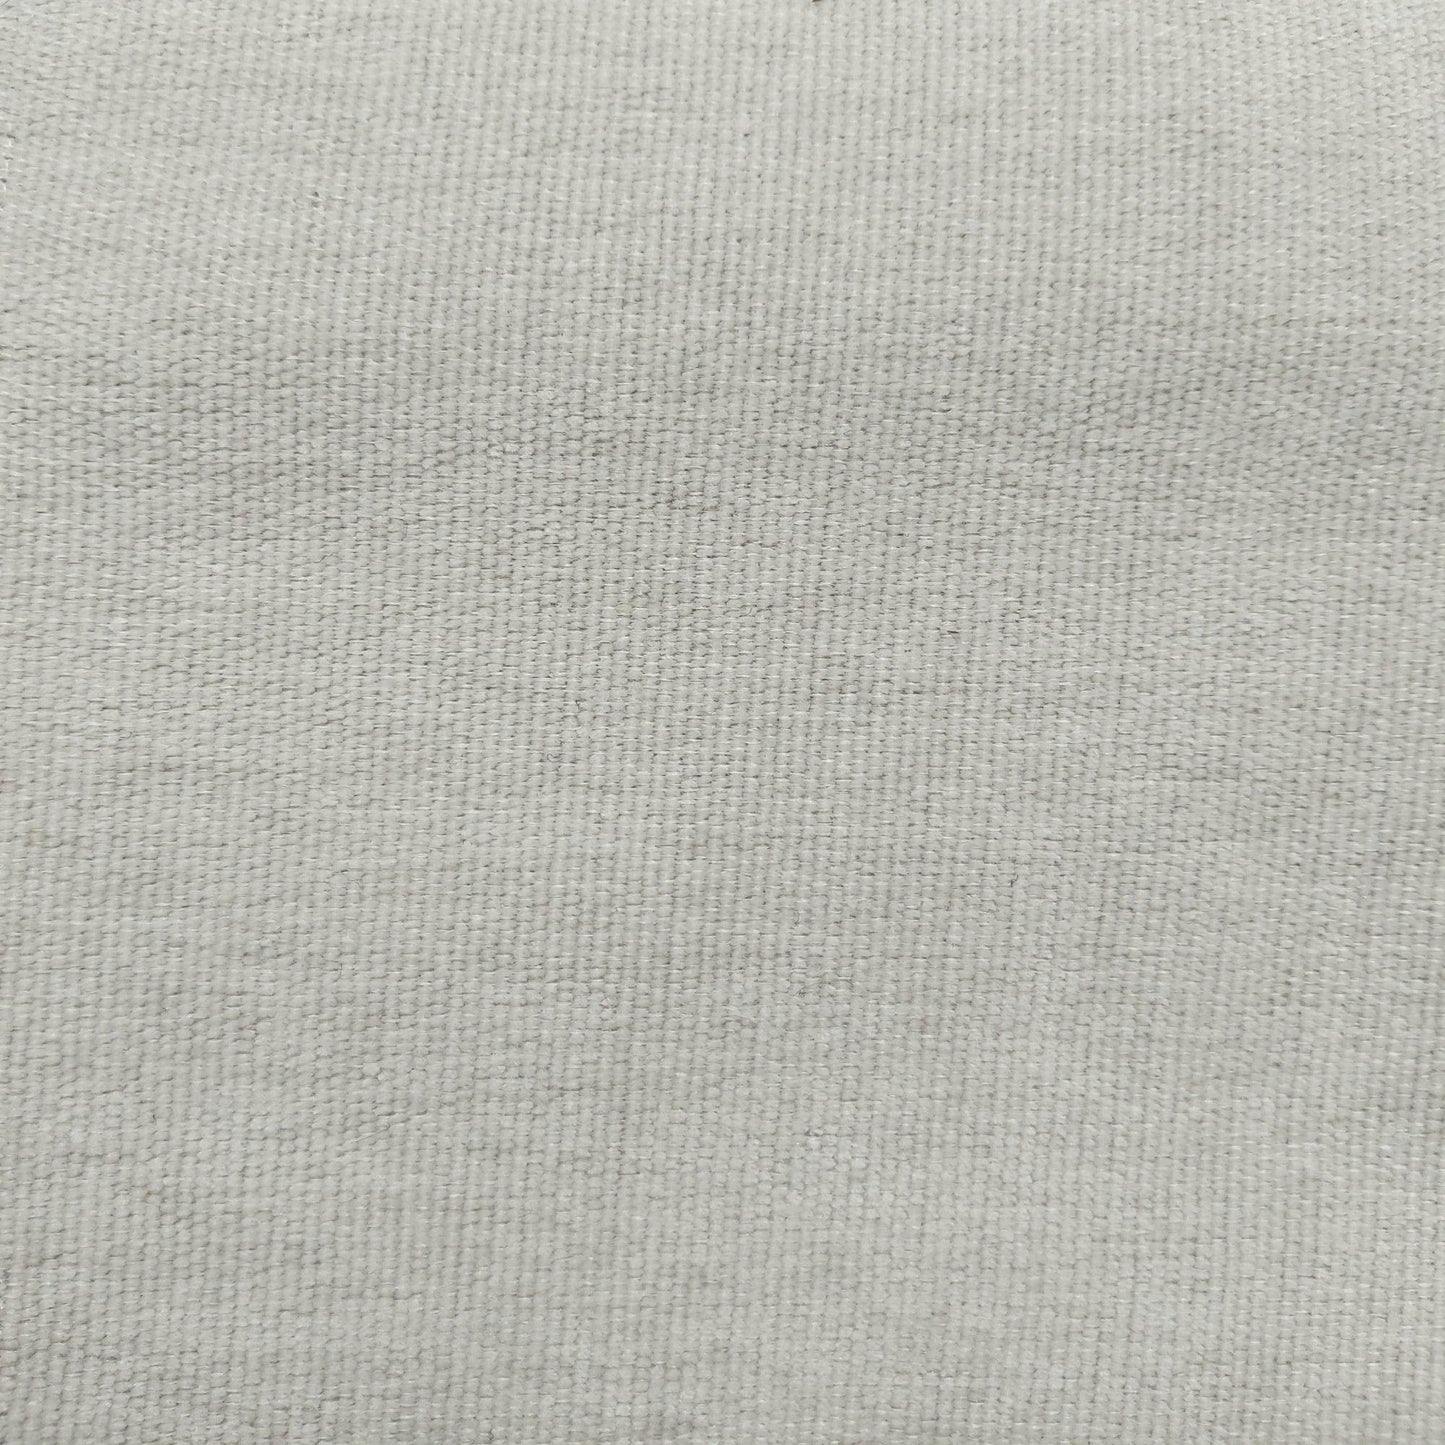 Chenille Upholstery Fabric Snug Sand